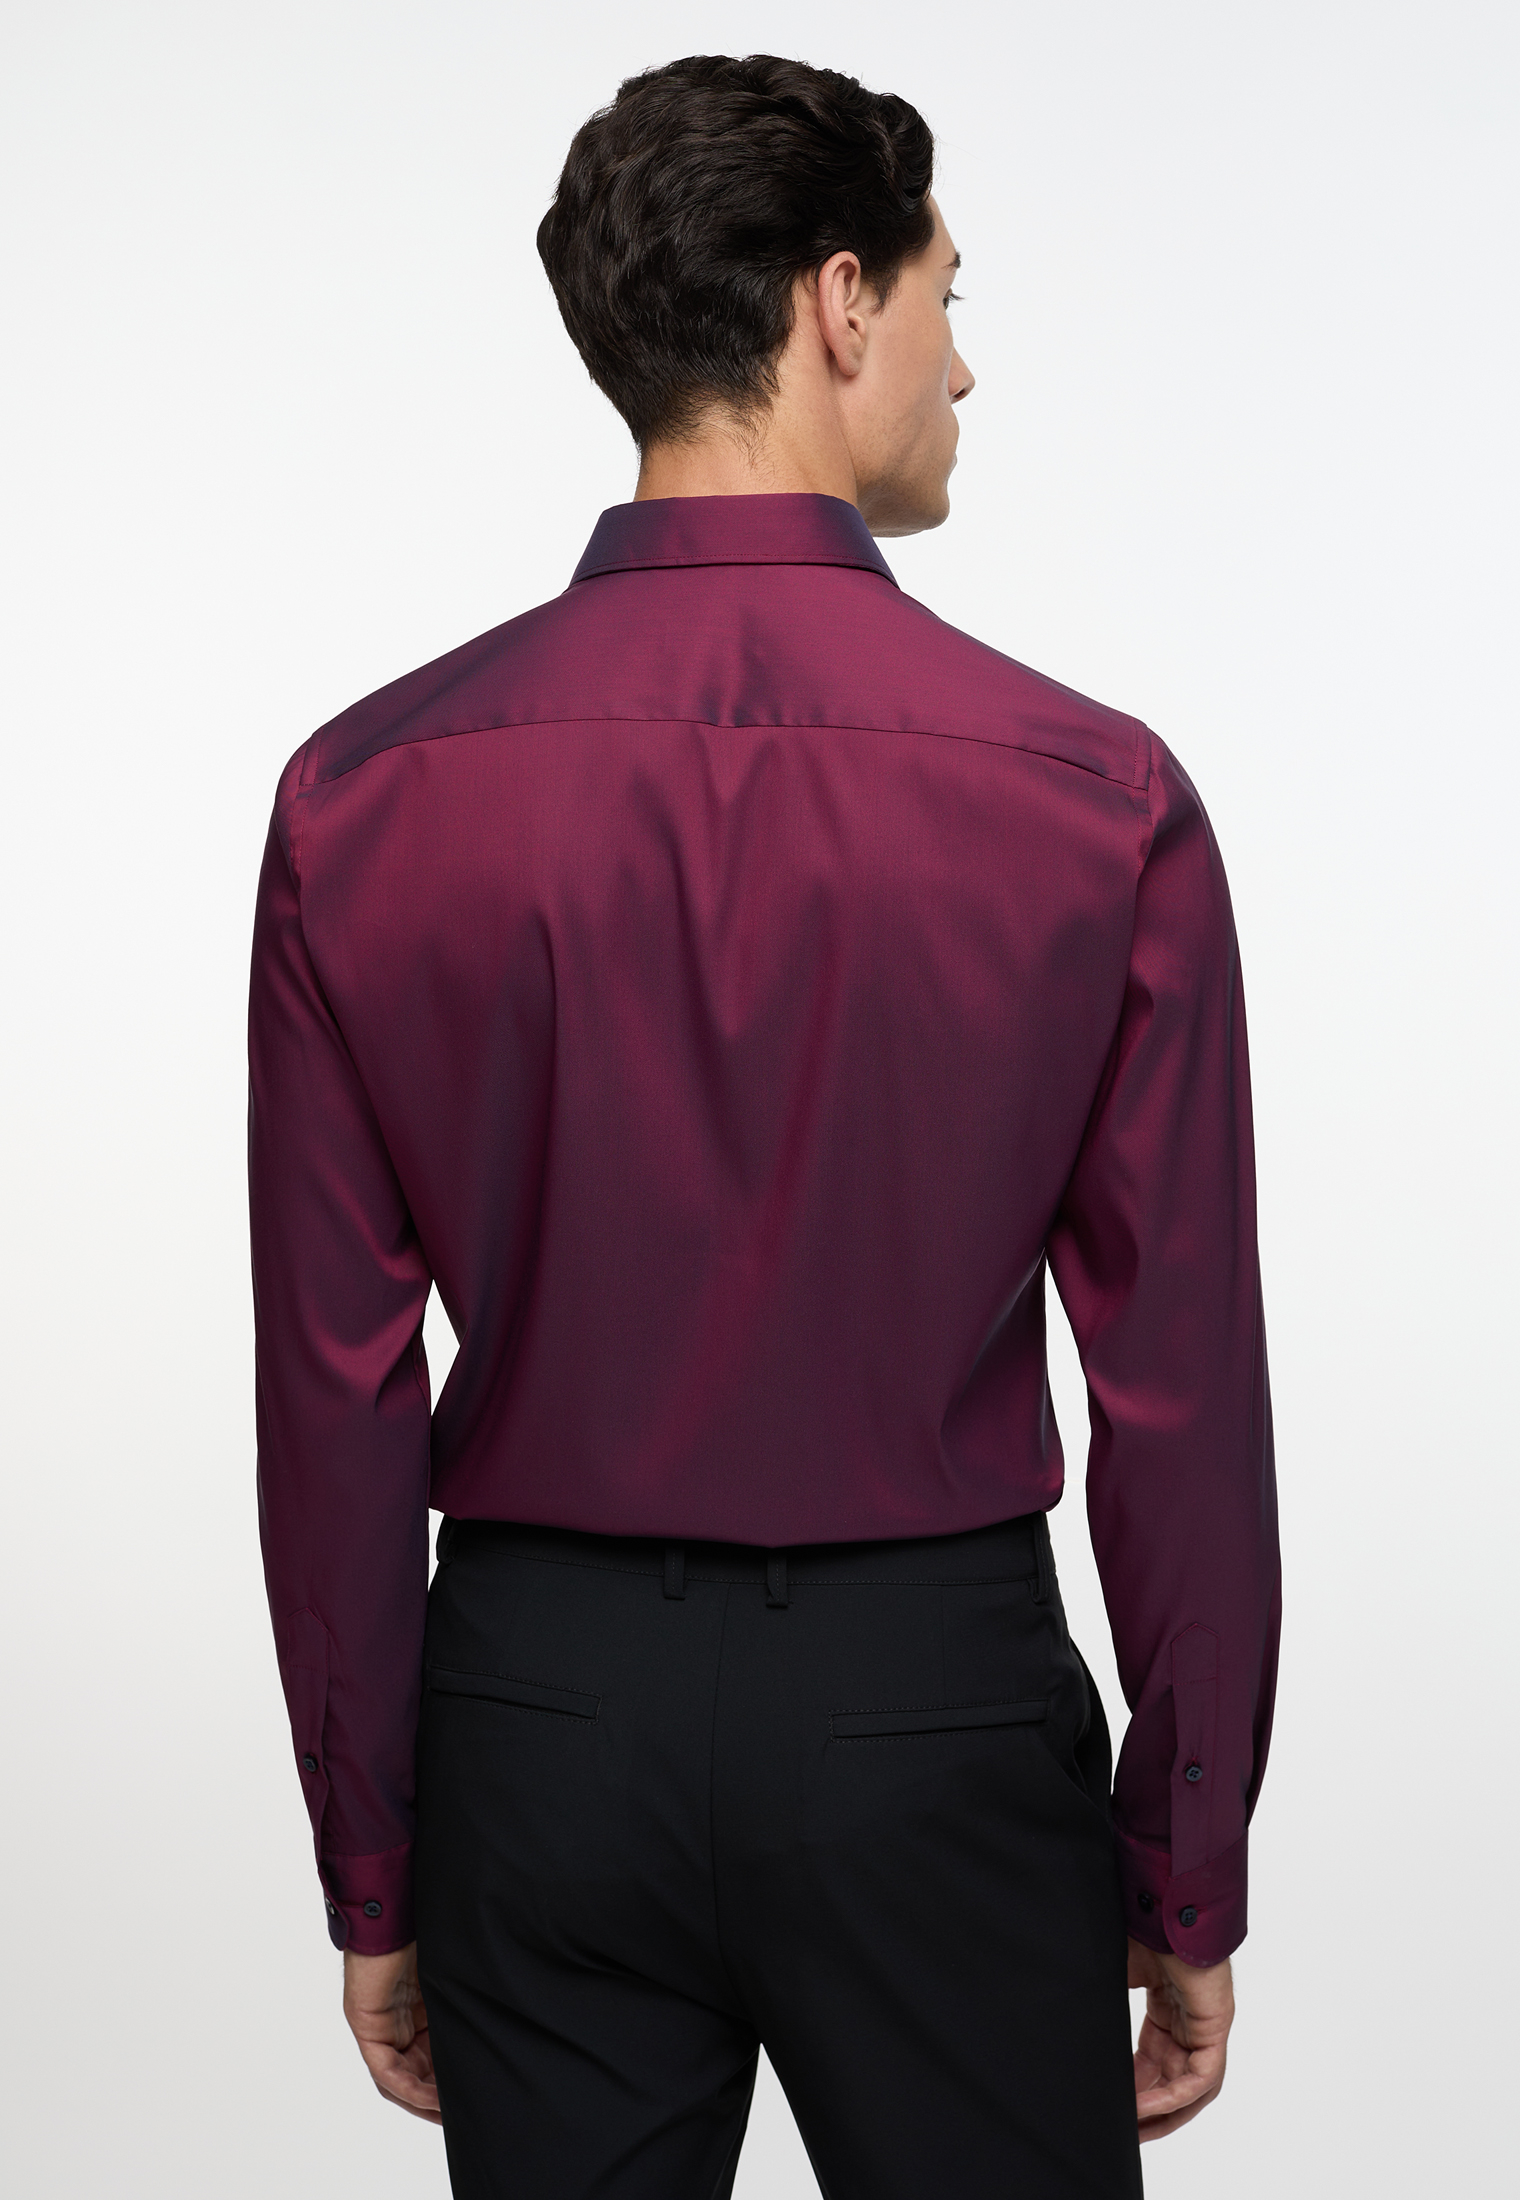 in Shirt | FIT burgunder Performance unifarben burgunder | 1SH02217-05-81-39-1/1 | 39 Langarm | SLIM